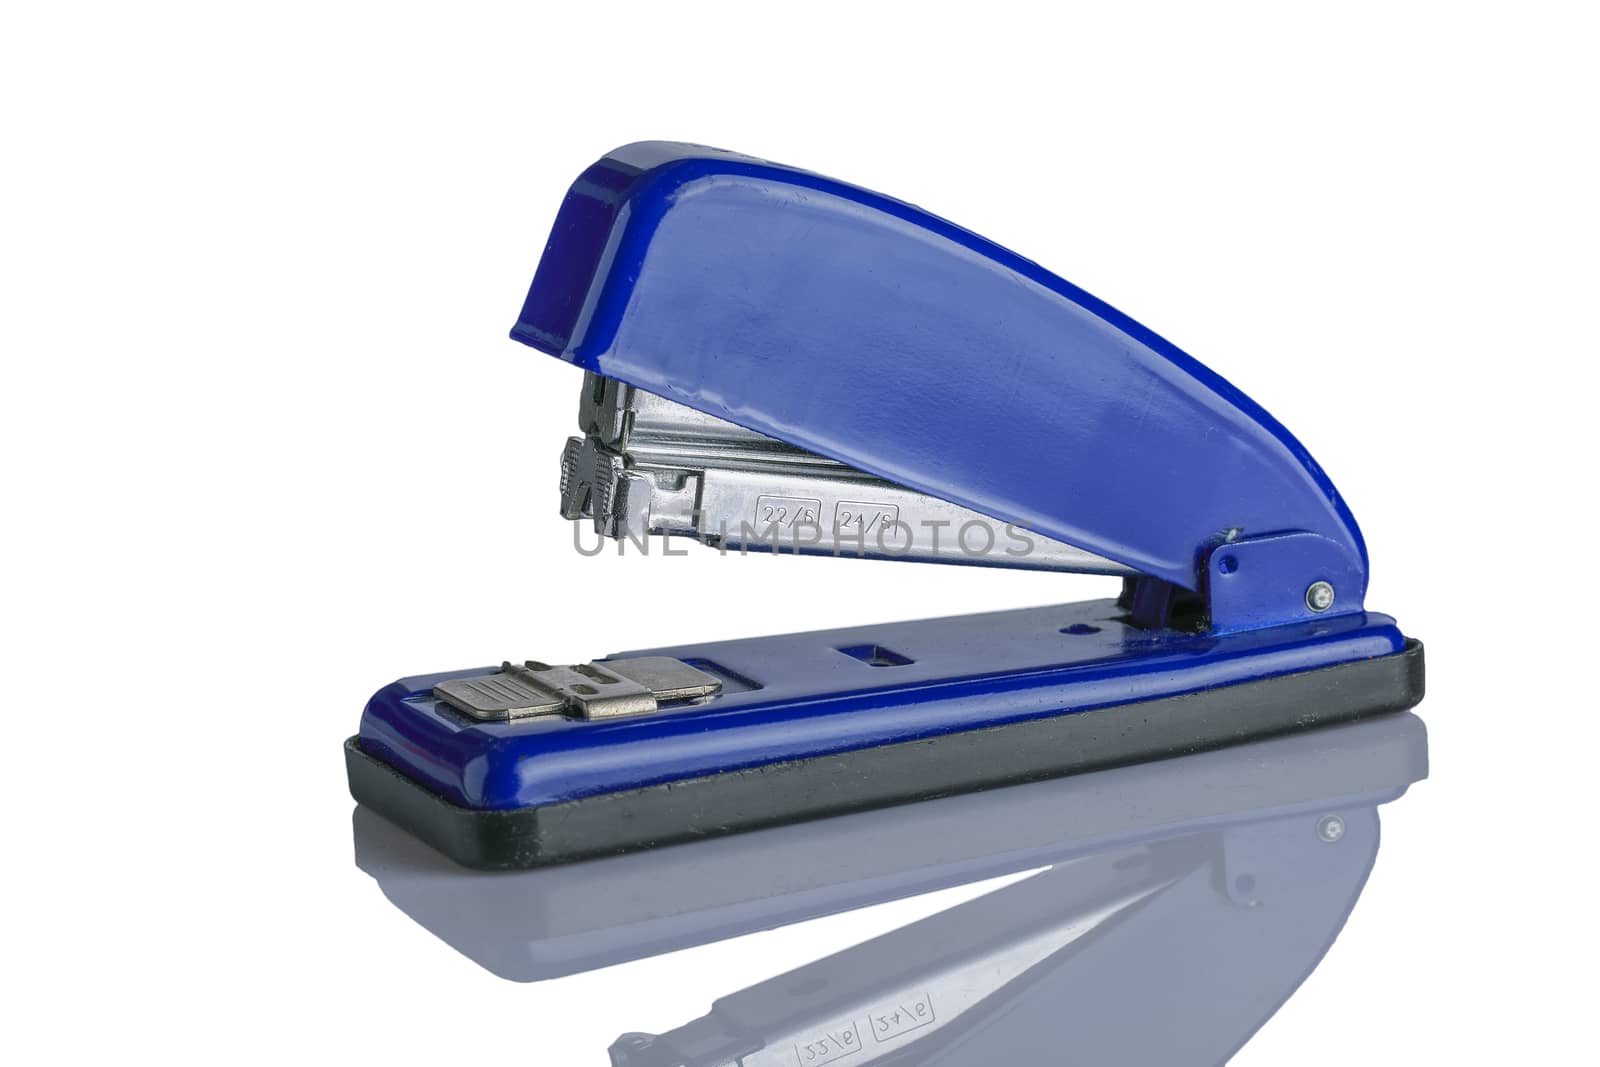 Isolated blue stapler machine by nachrc2001